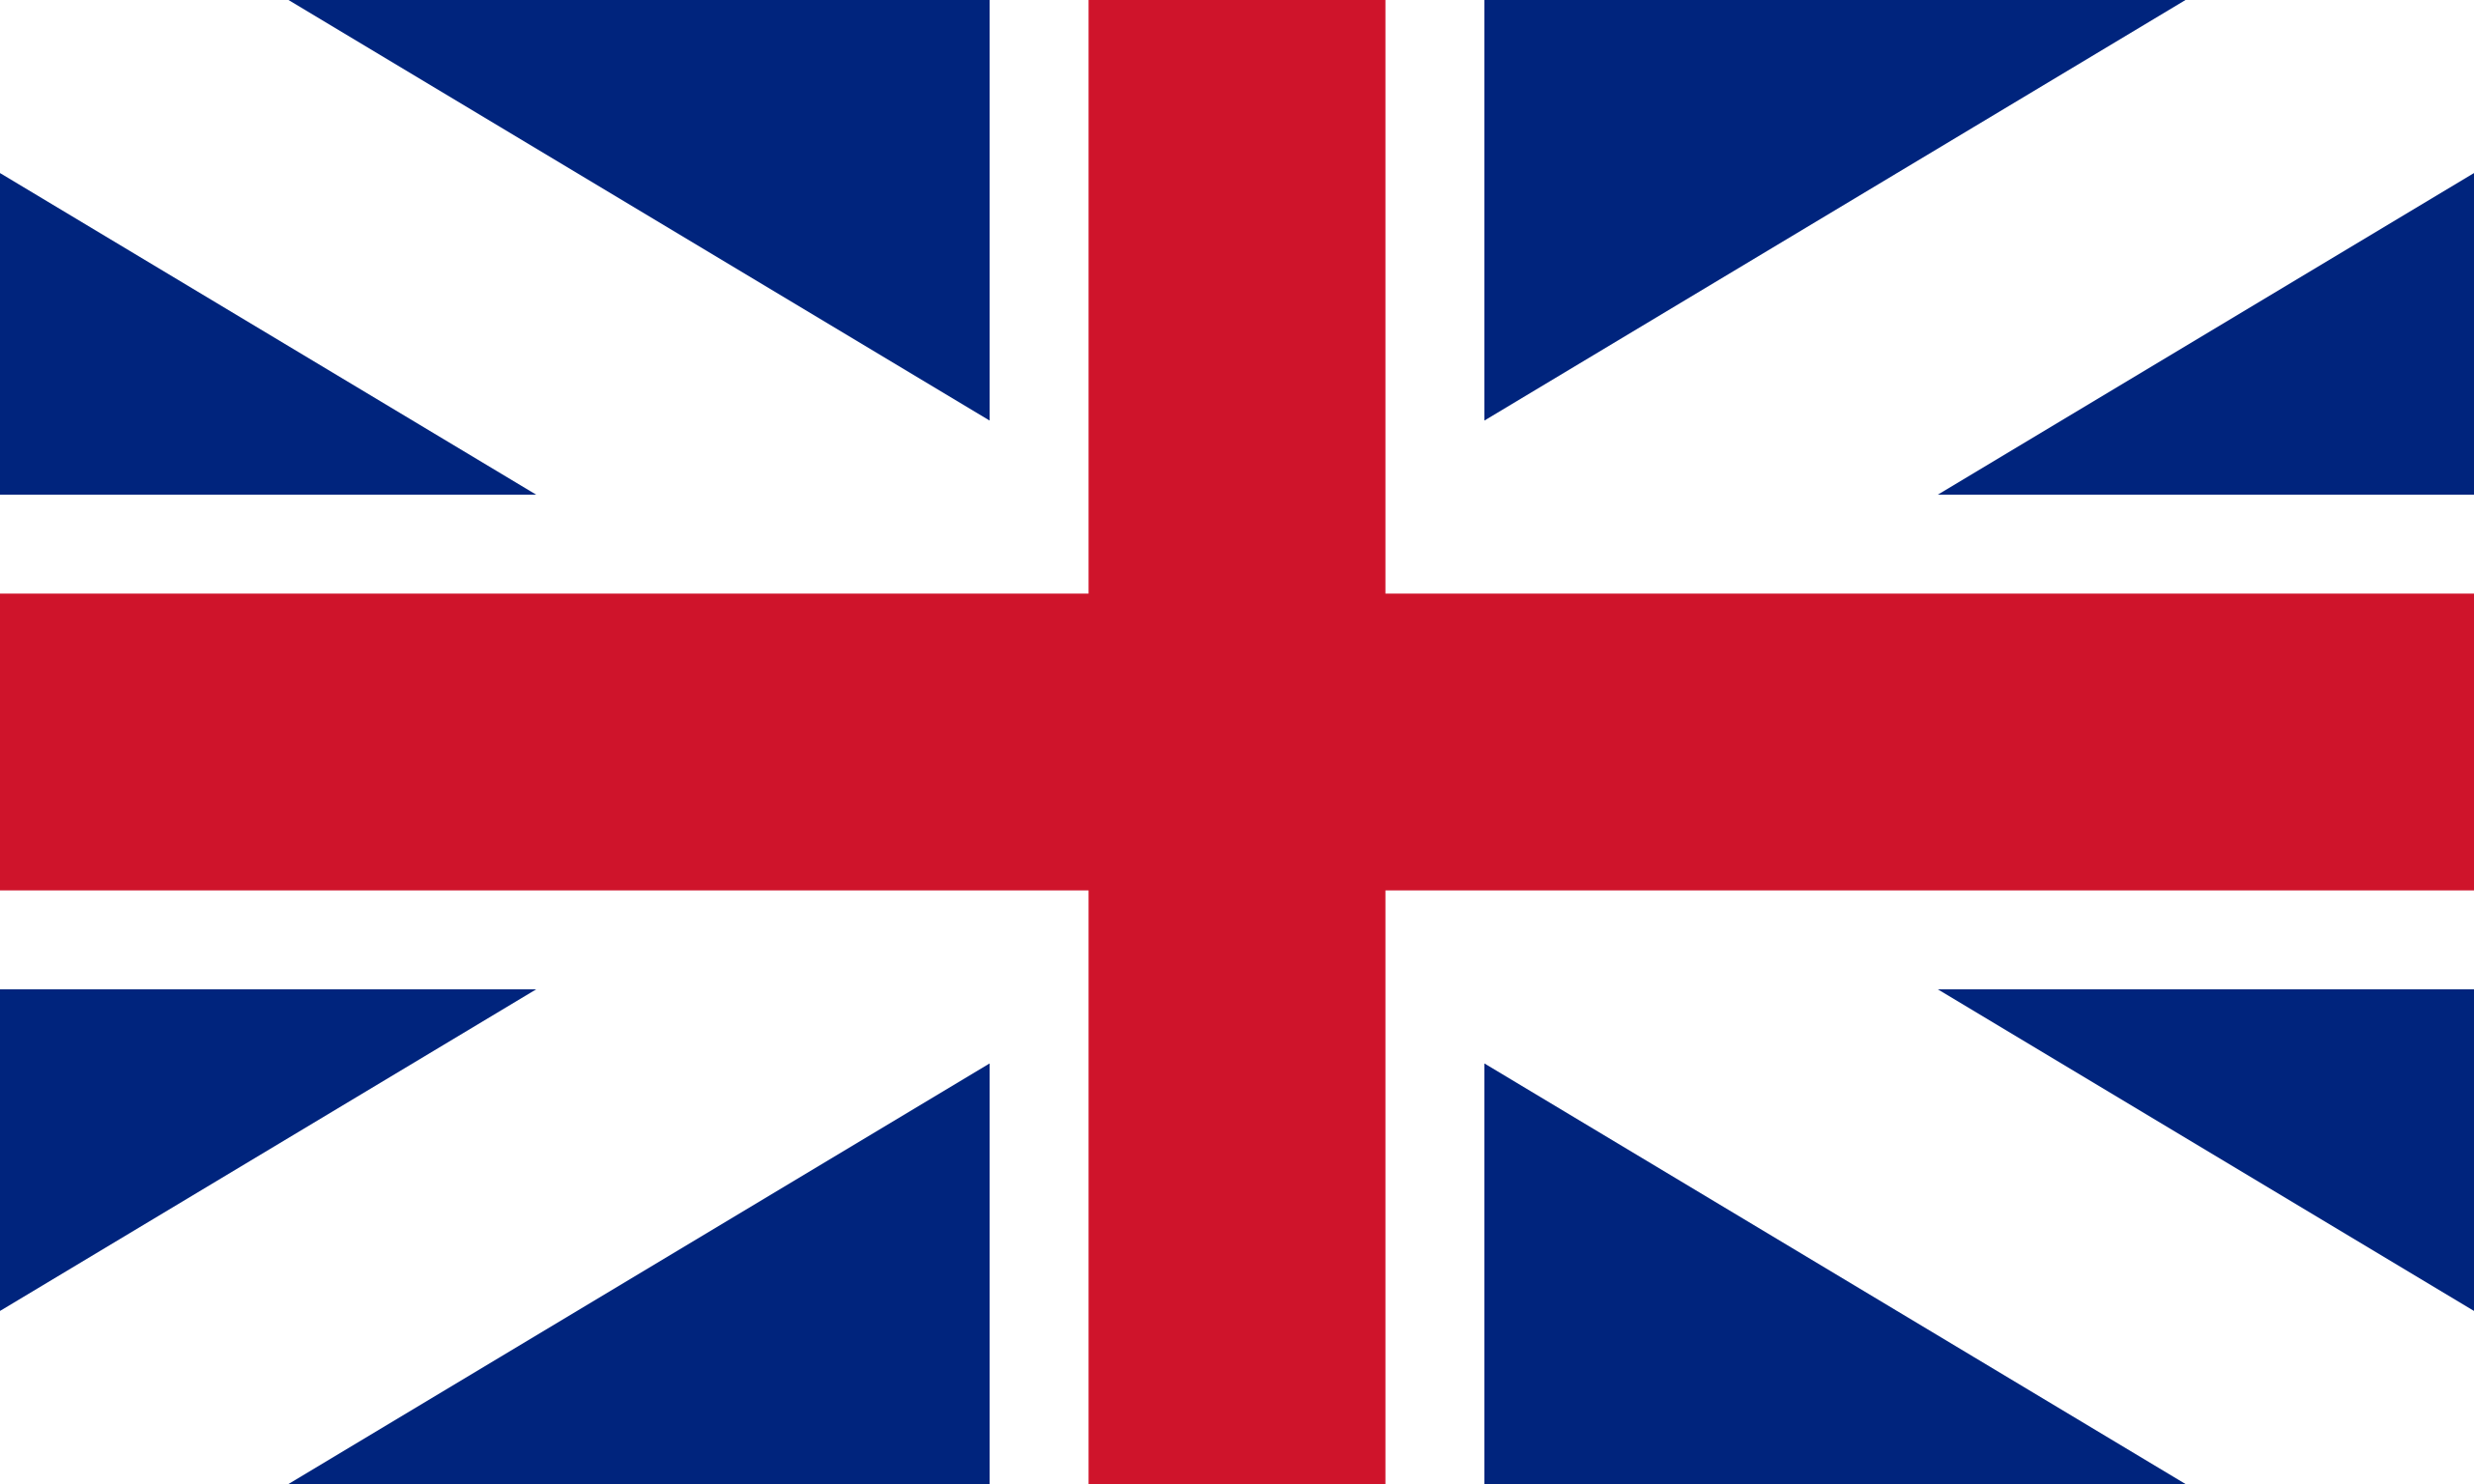 Vlag Verenigd Koninkrijk